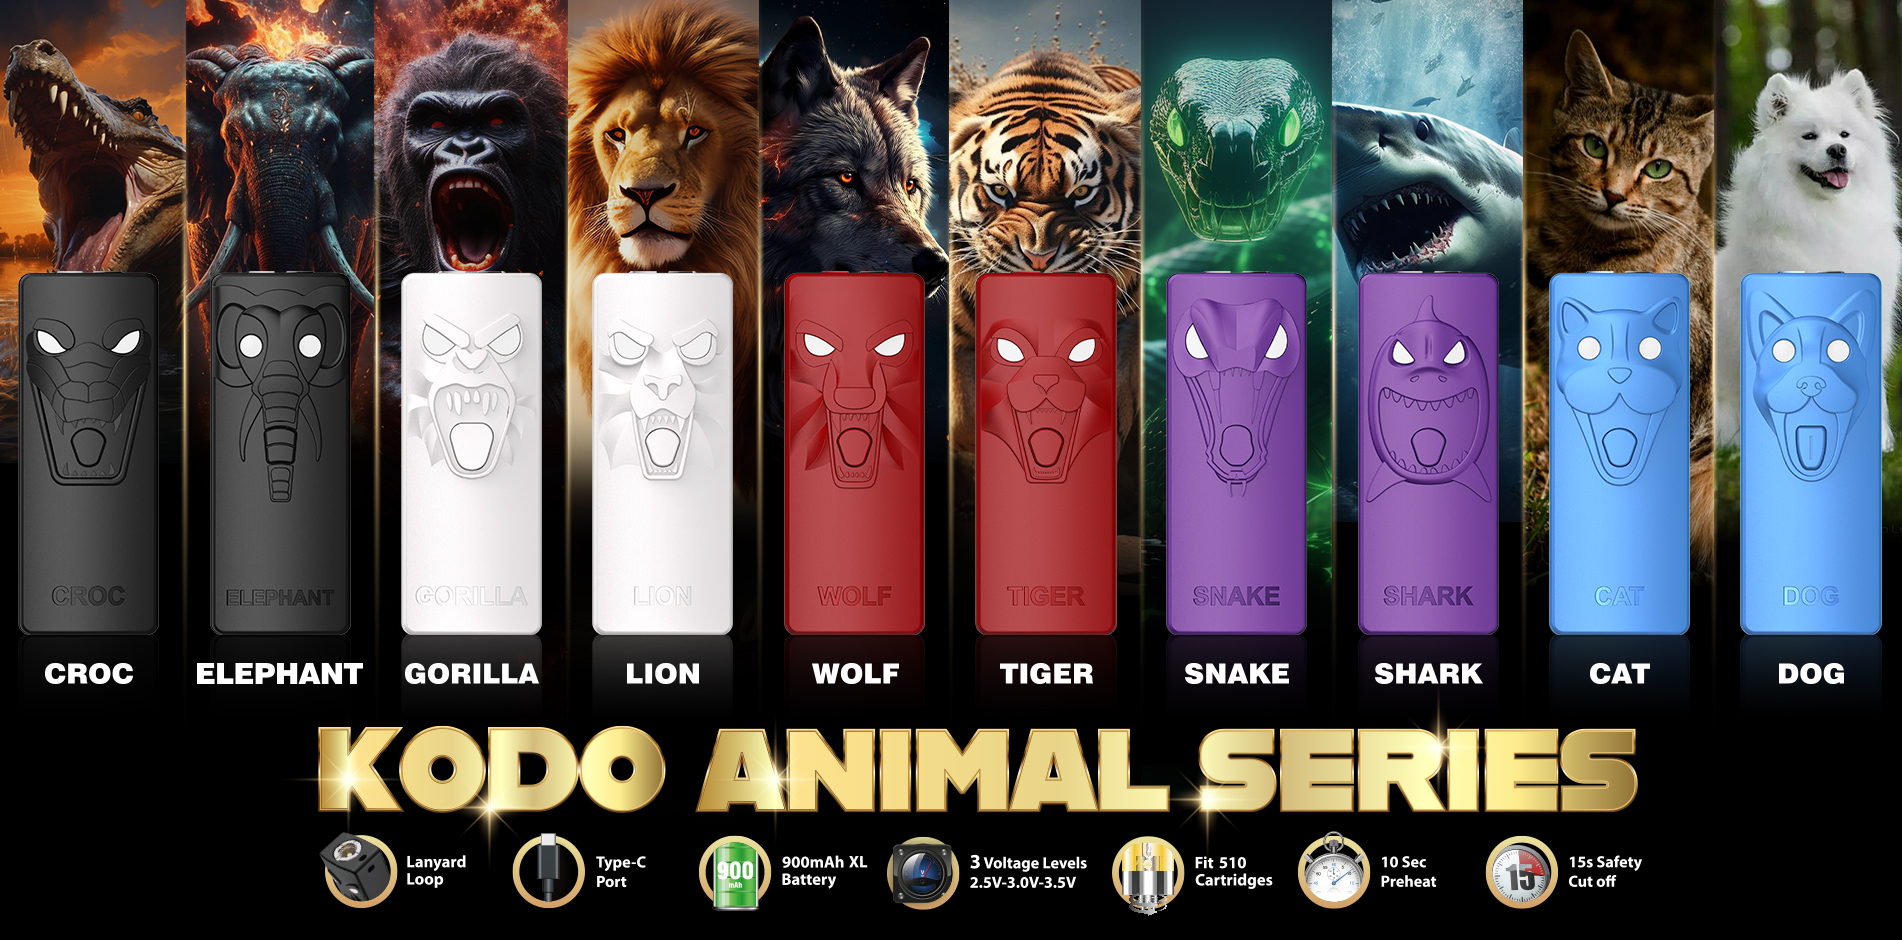 Yocan-Kodo-Animal-Series-banner.jpg